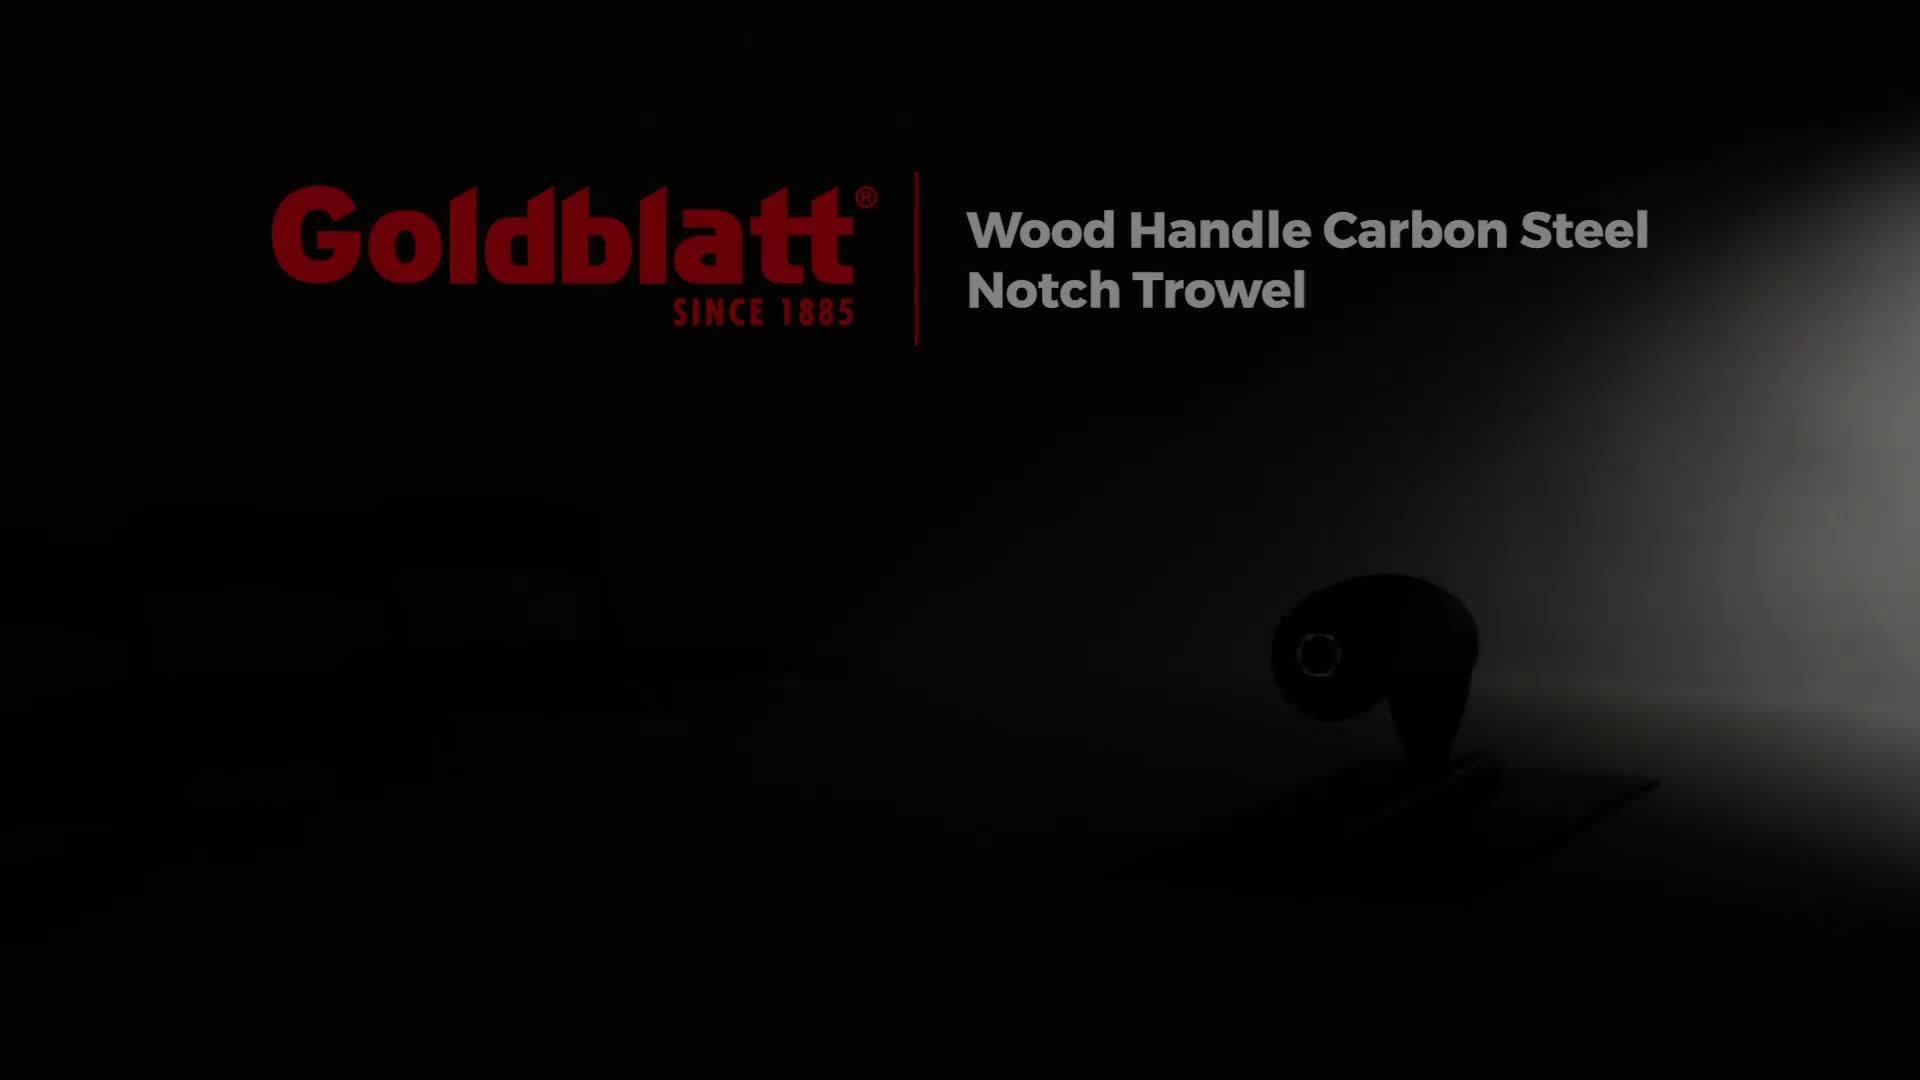 Goldblatt Wood Handle Square Notched Trowel